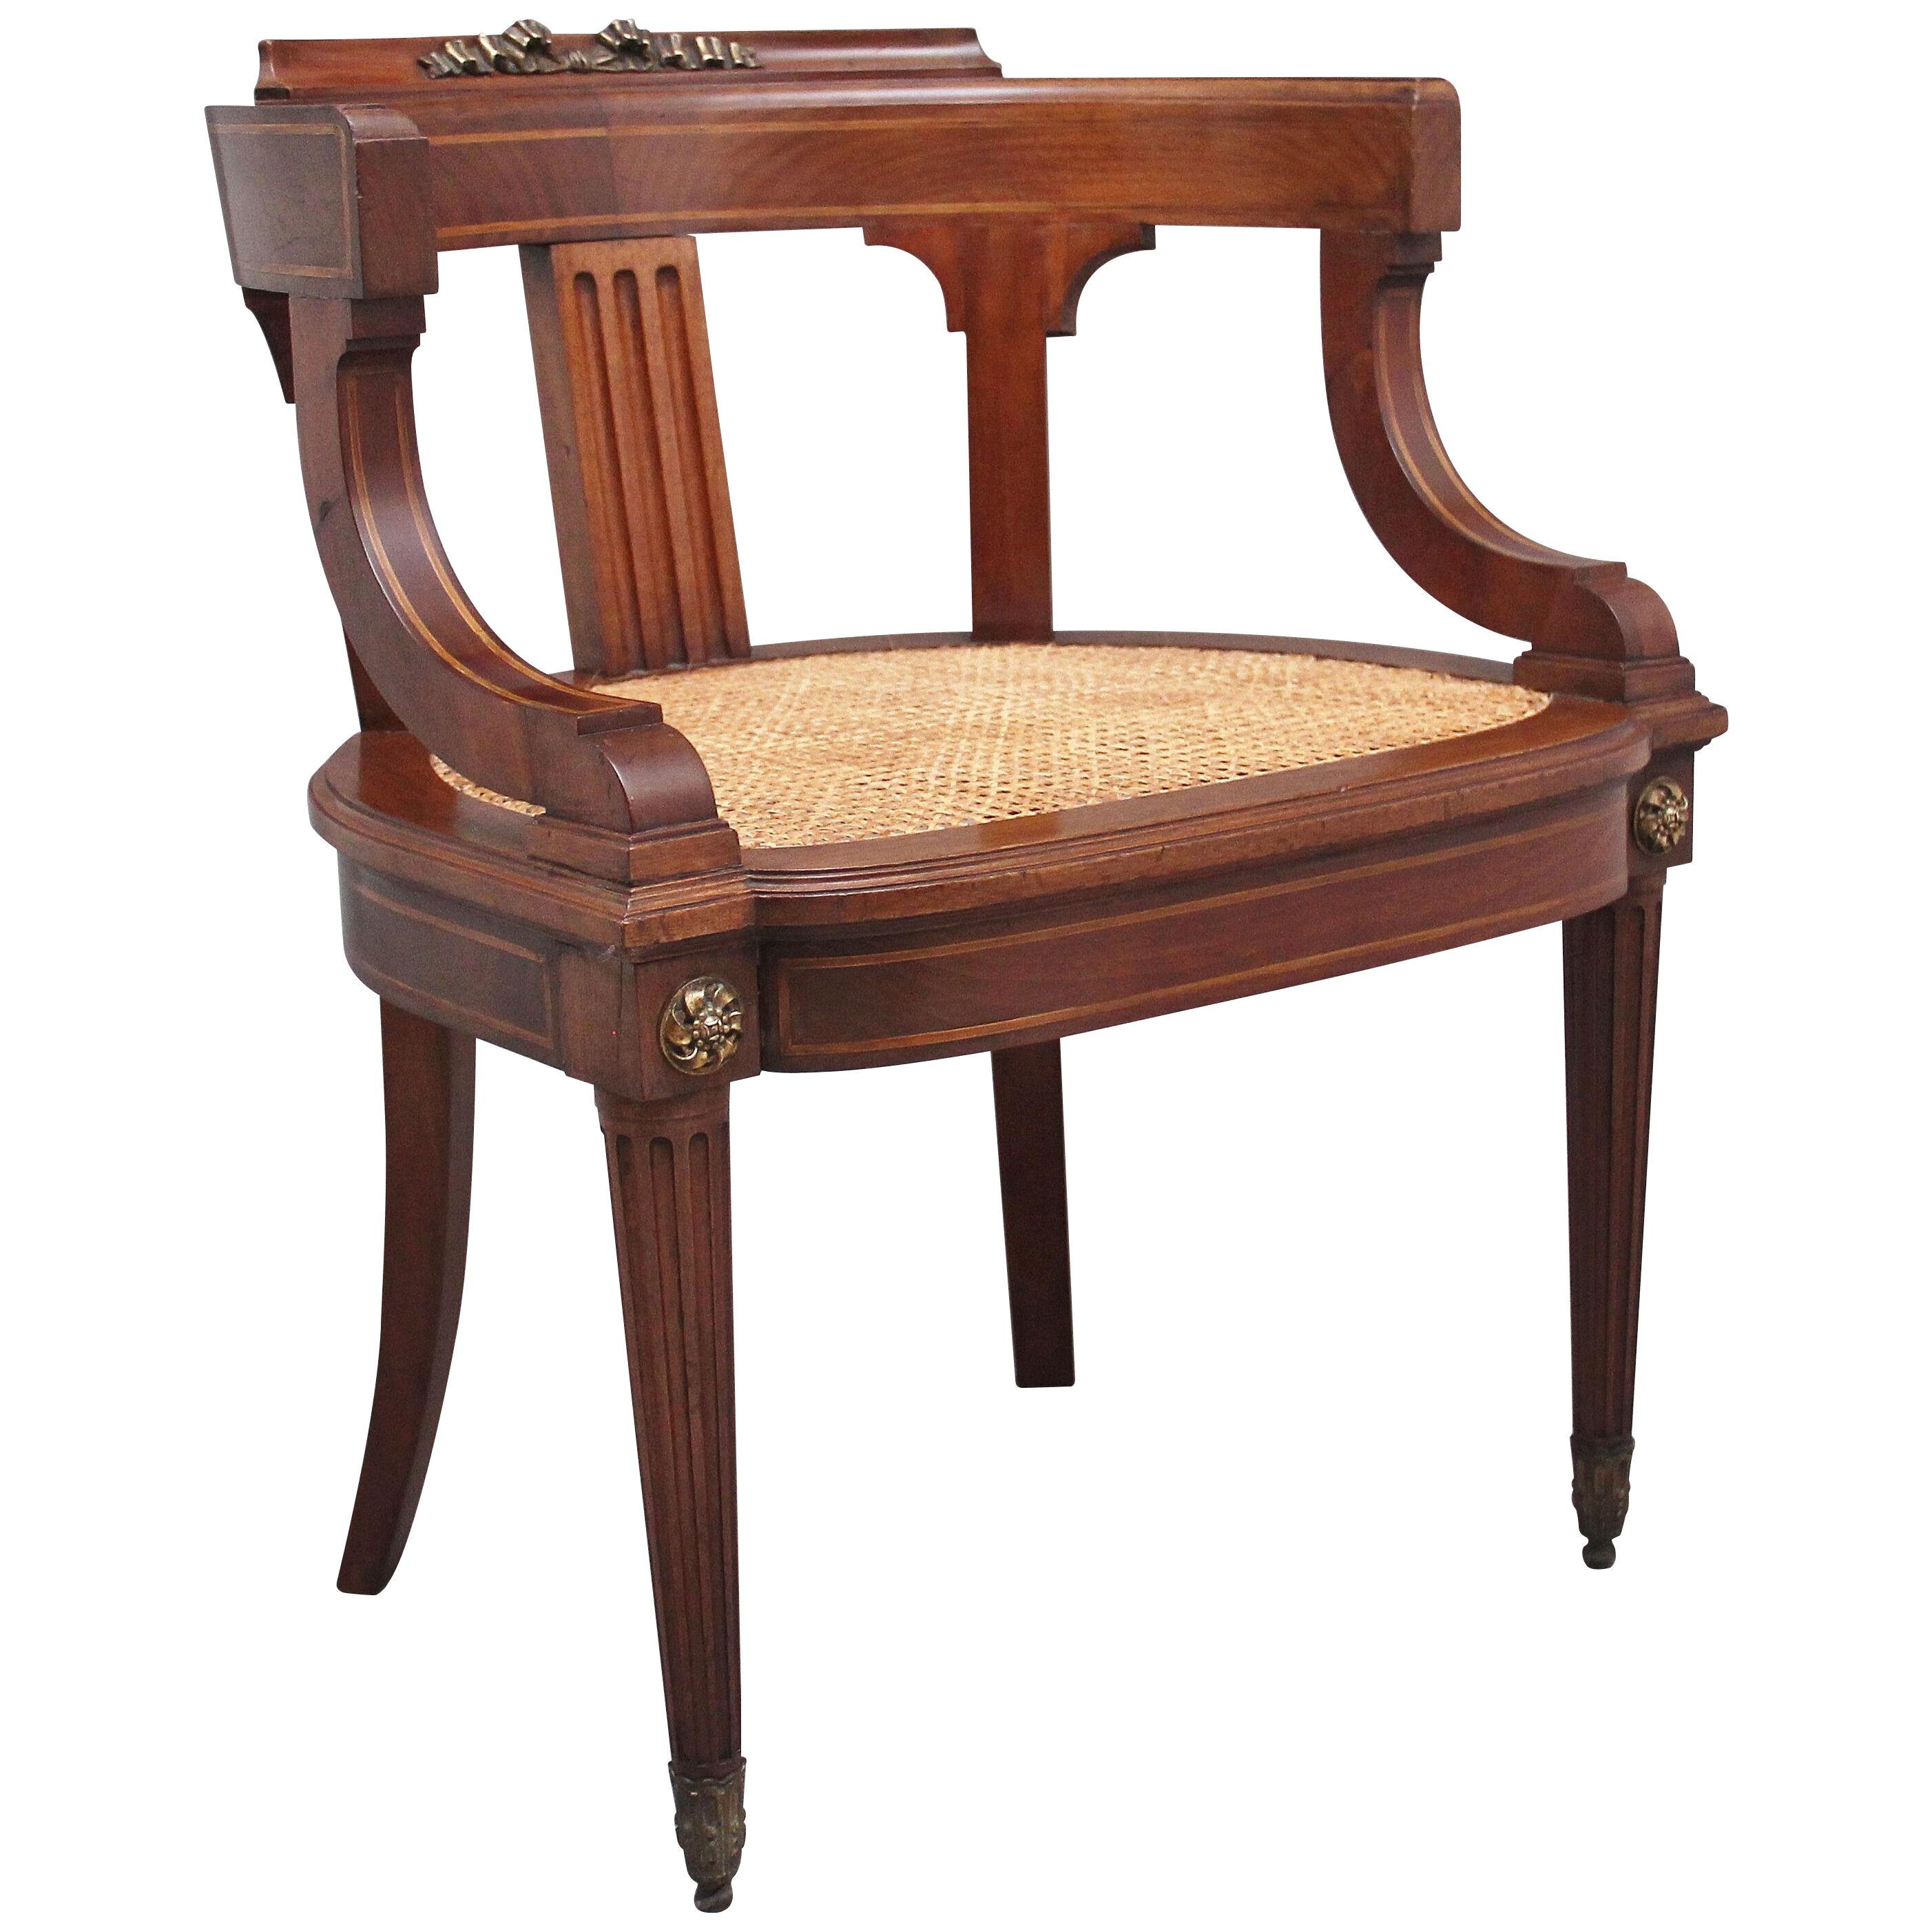 19th Century French mahogany desk chair